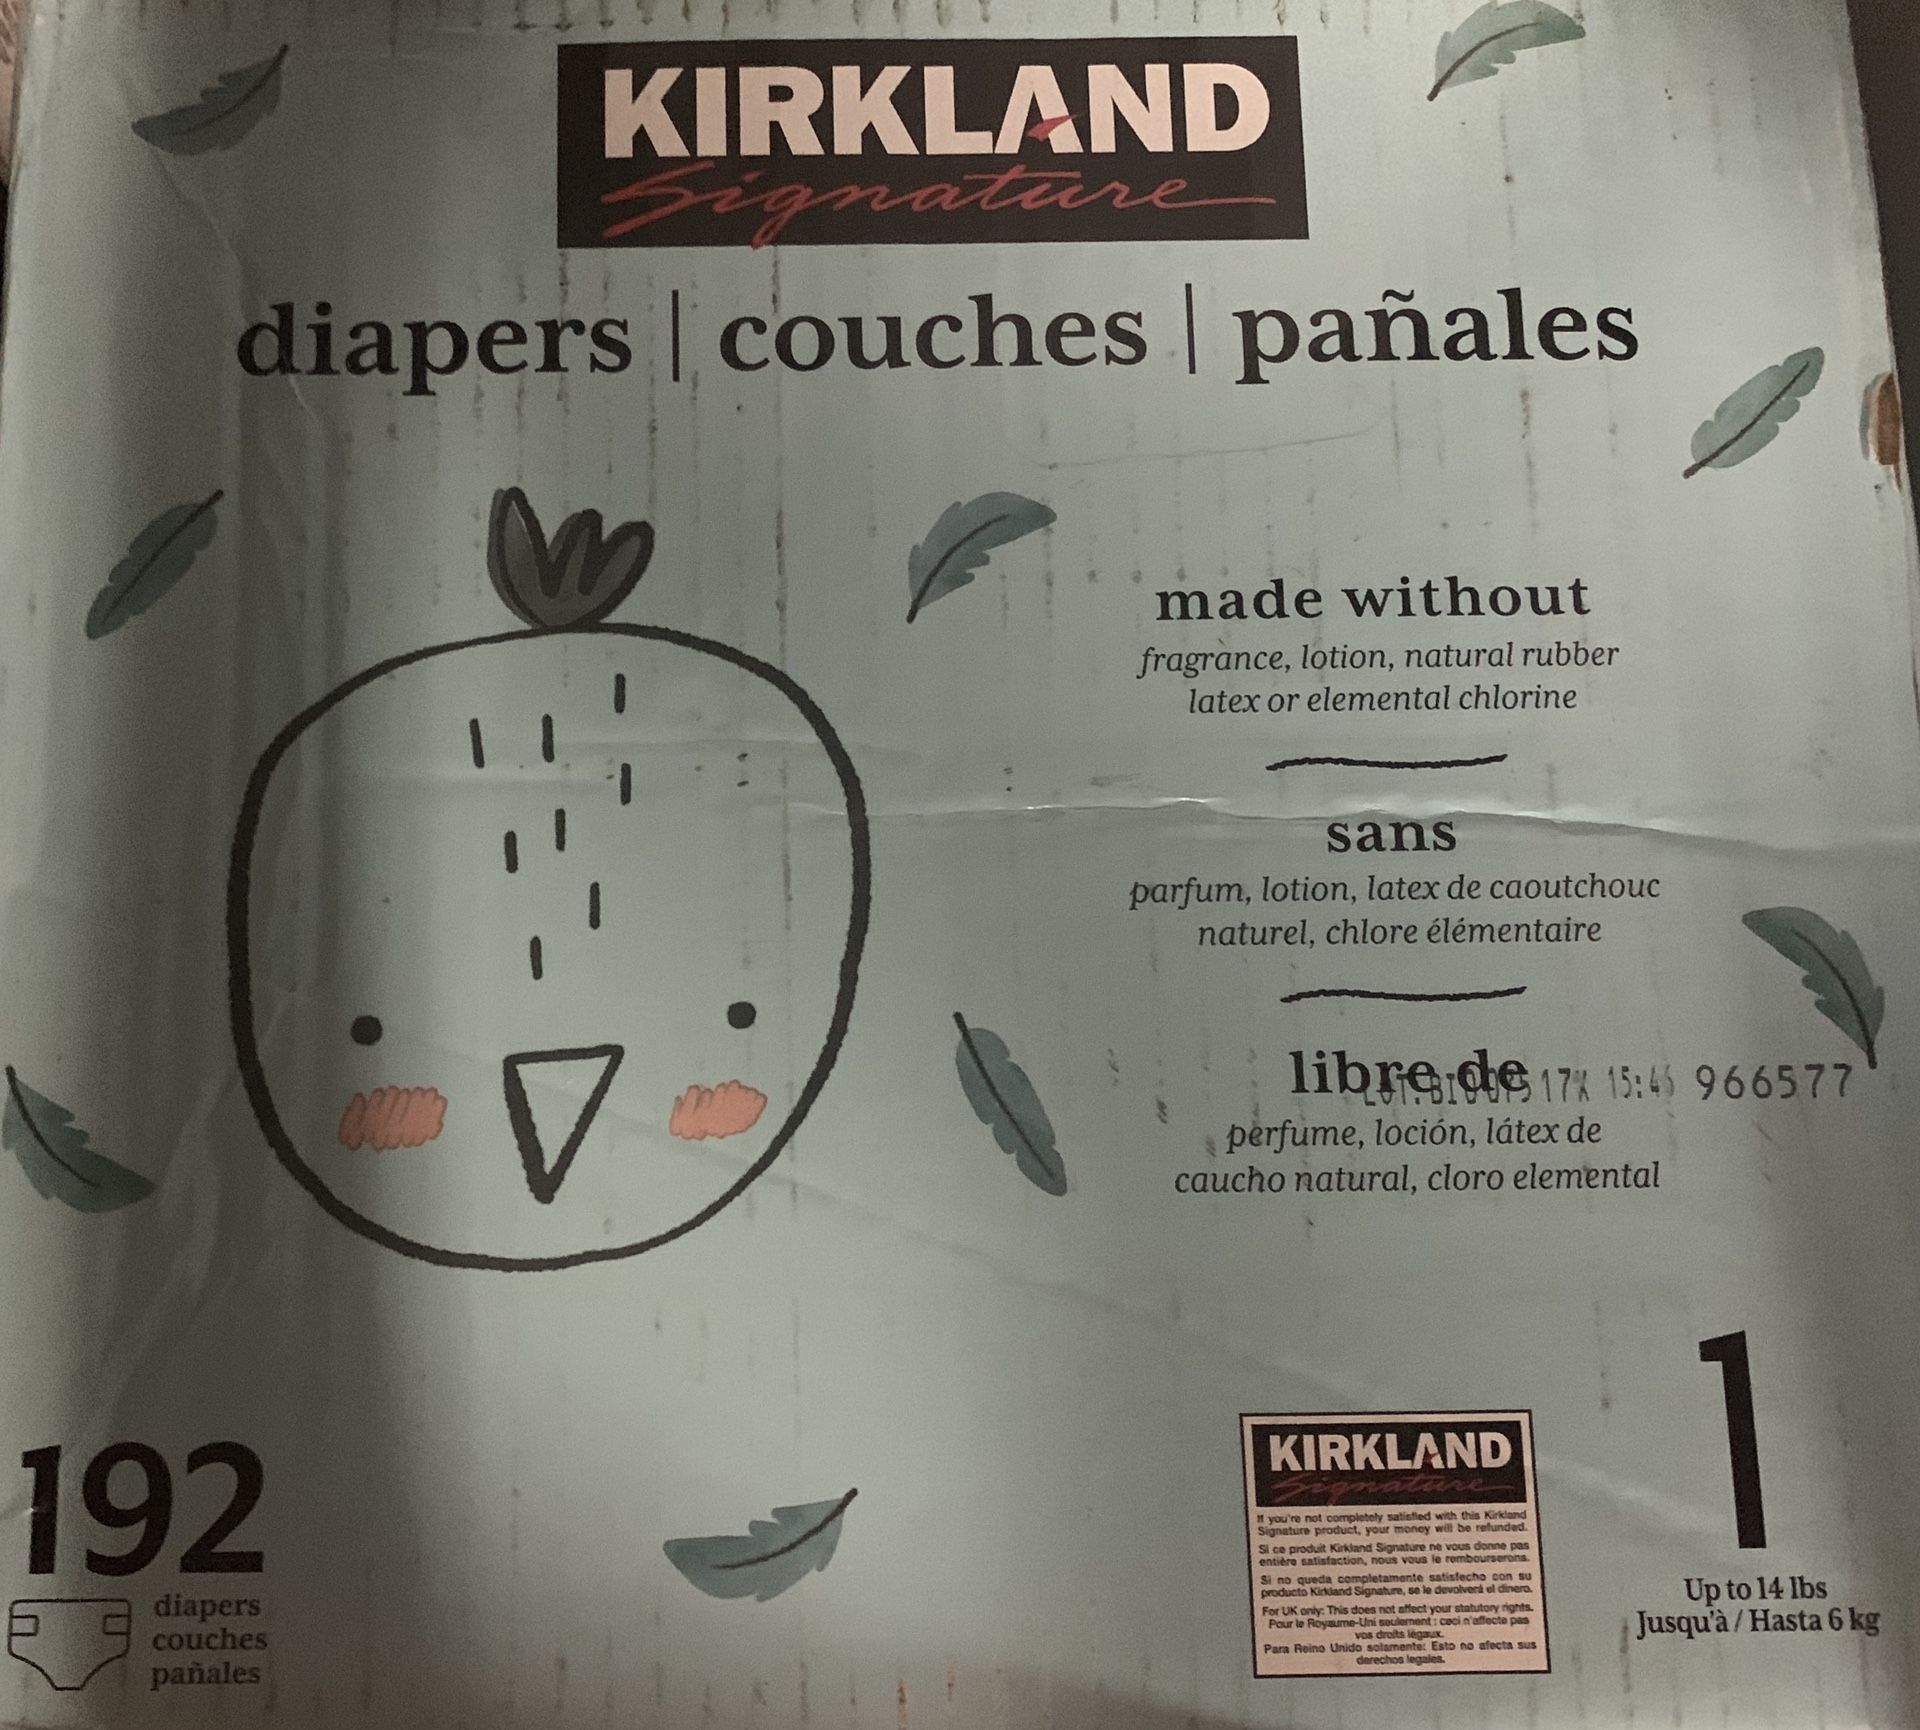 Kirkland size 1. 192 count diapers